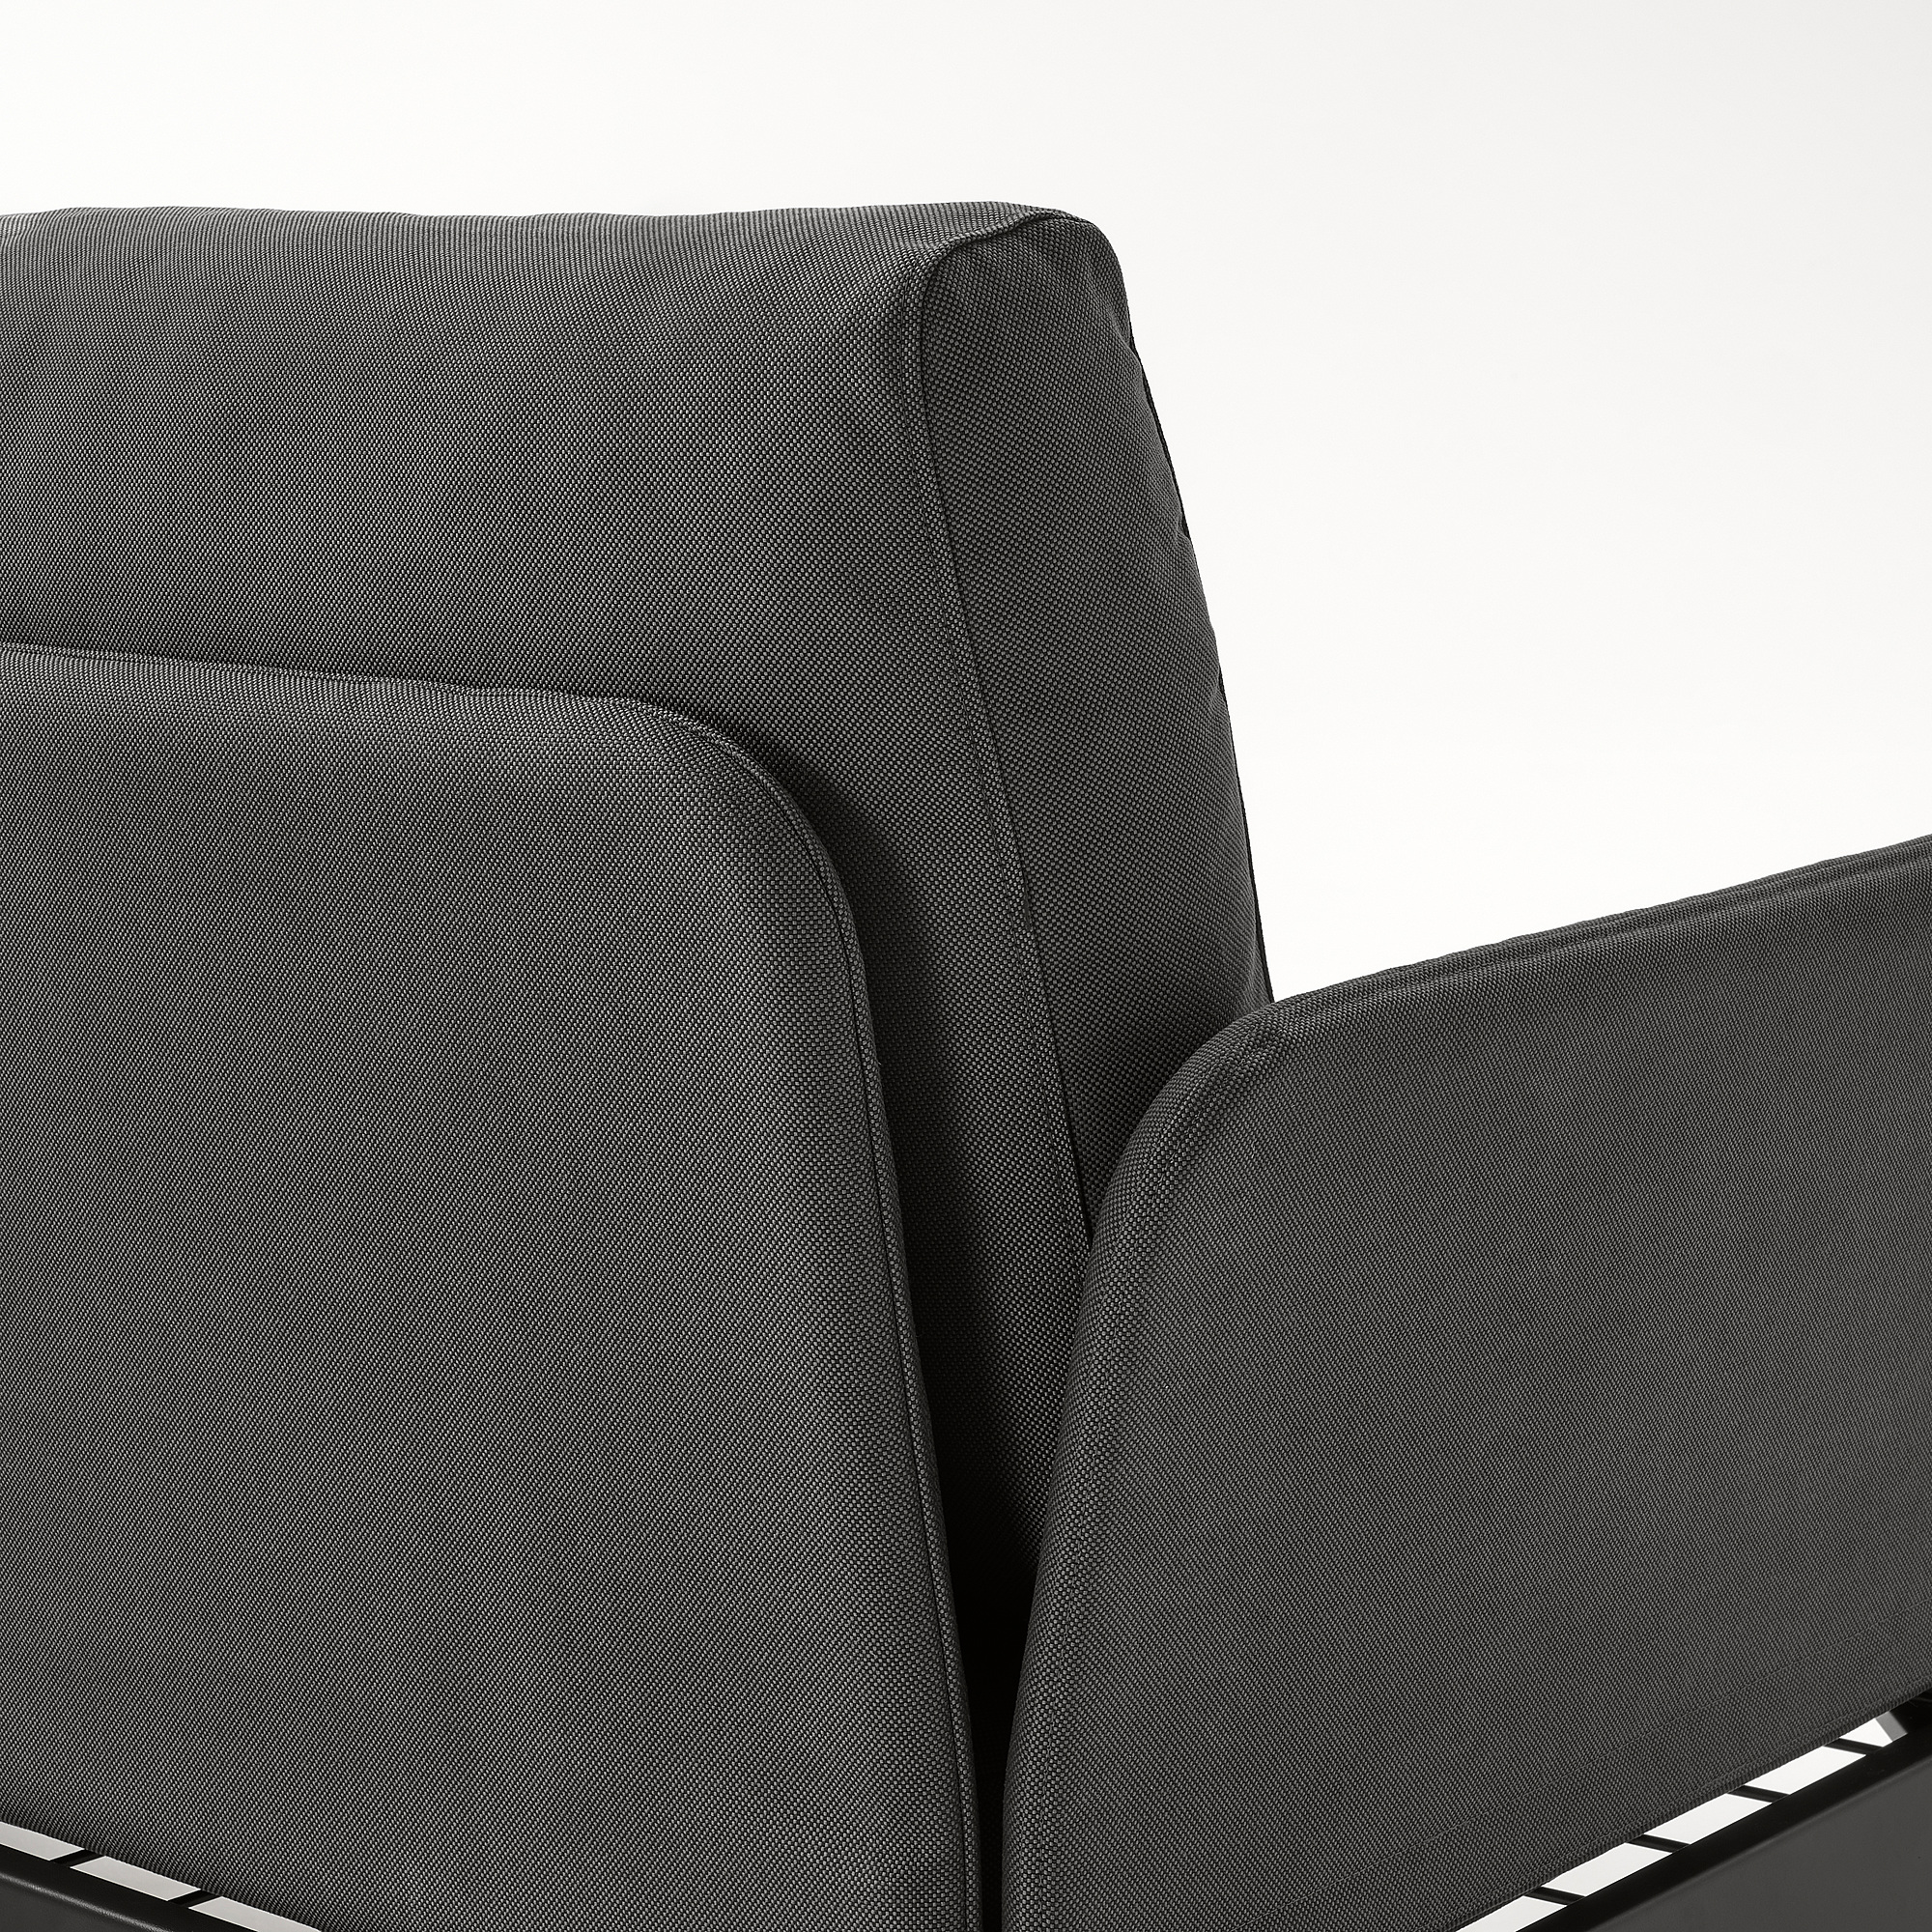 FRÖSÖN/DUVHOLMEN seat cushion, outdoor, dark grey, 124x62 cm - IKEA